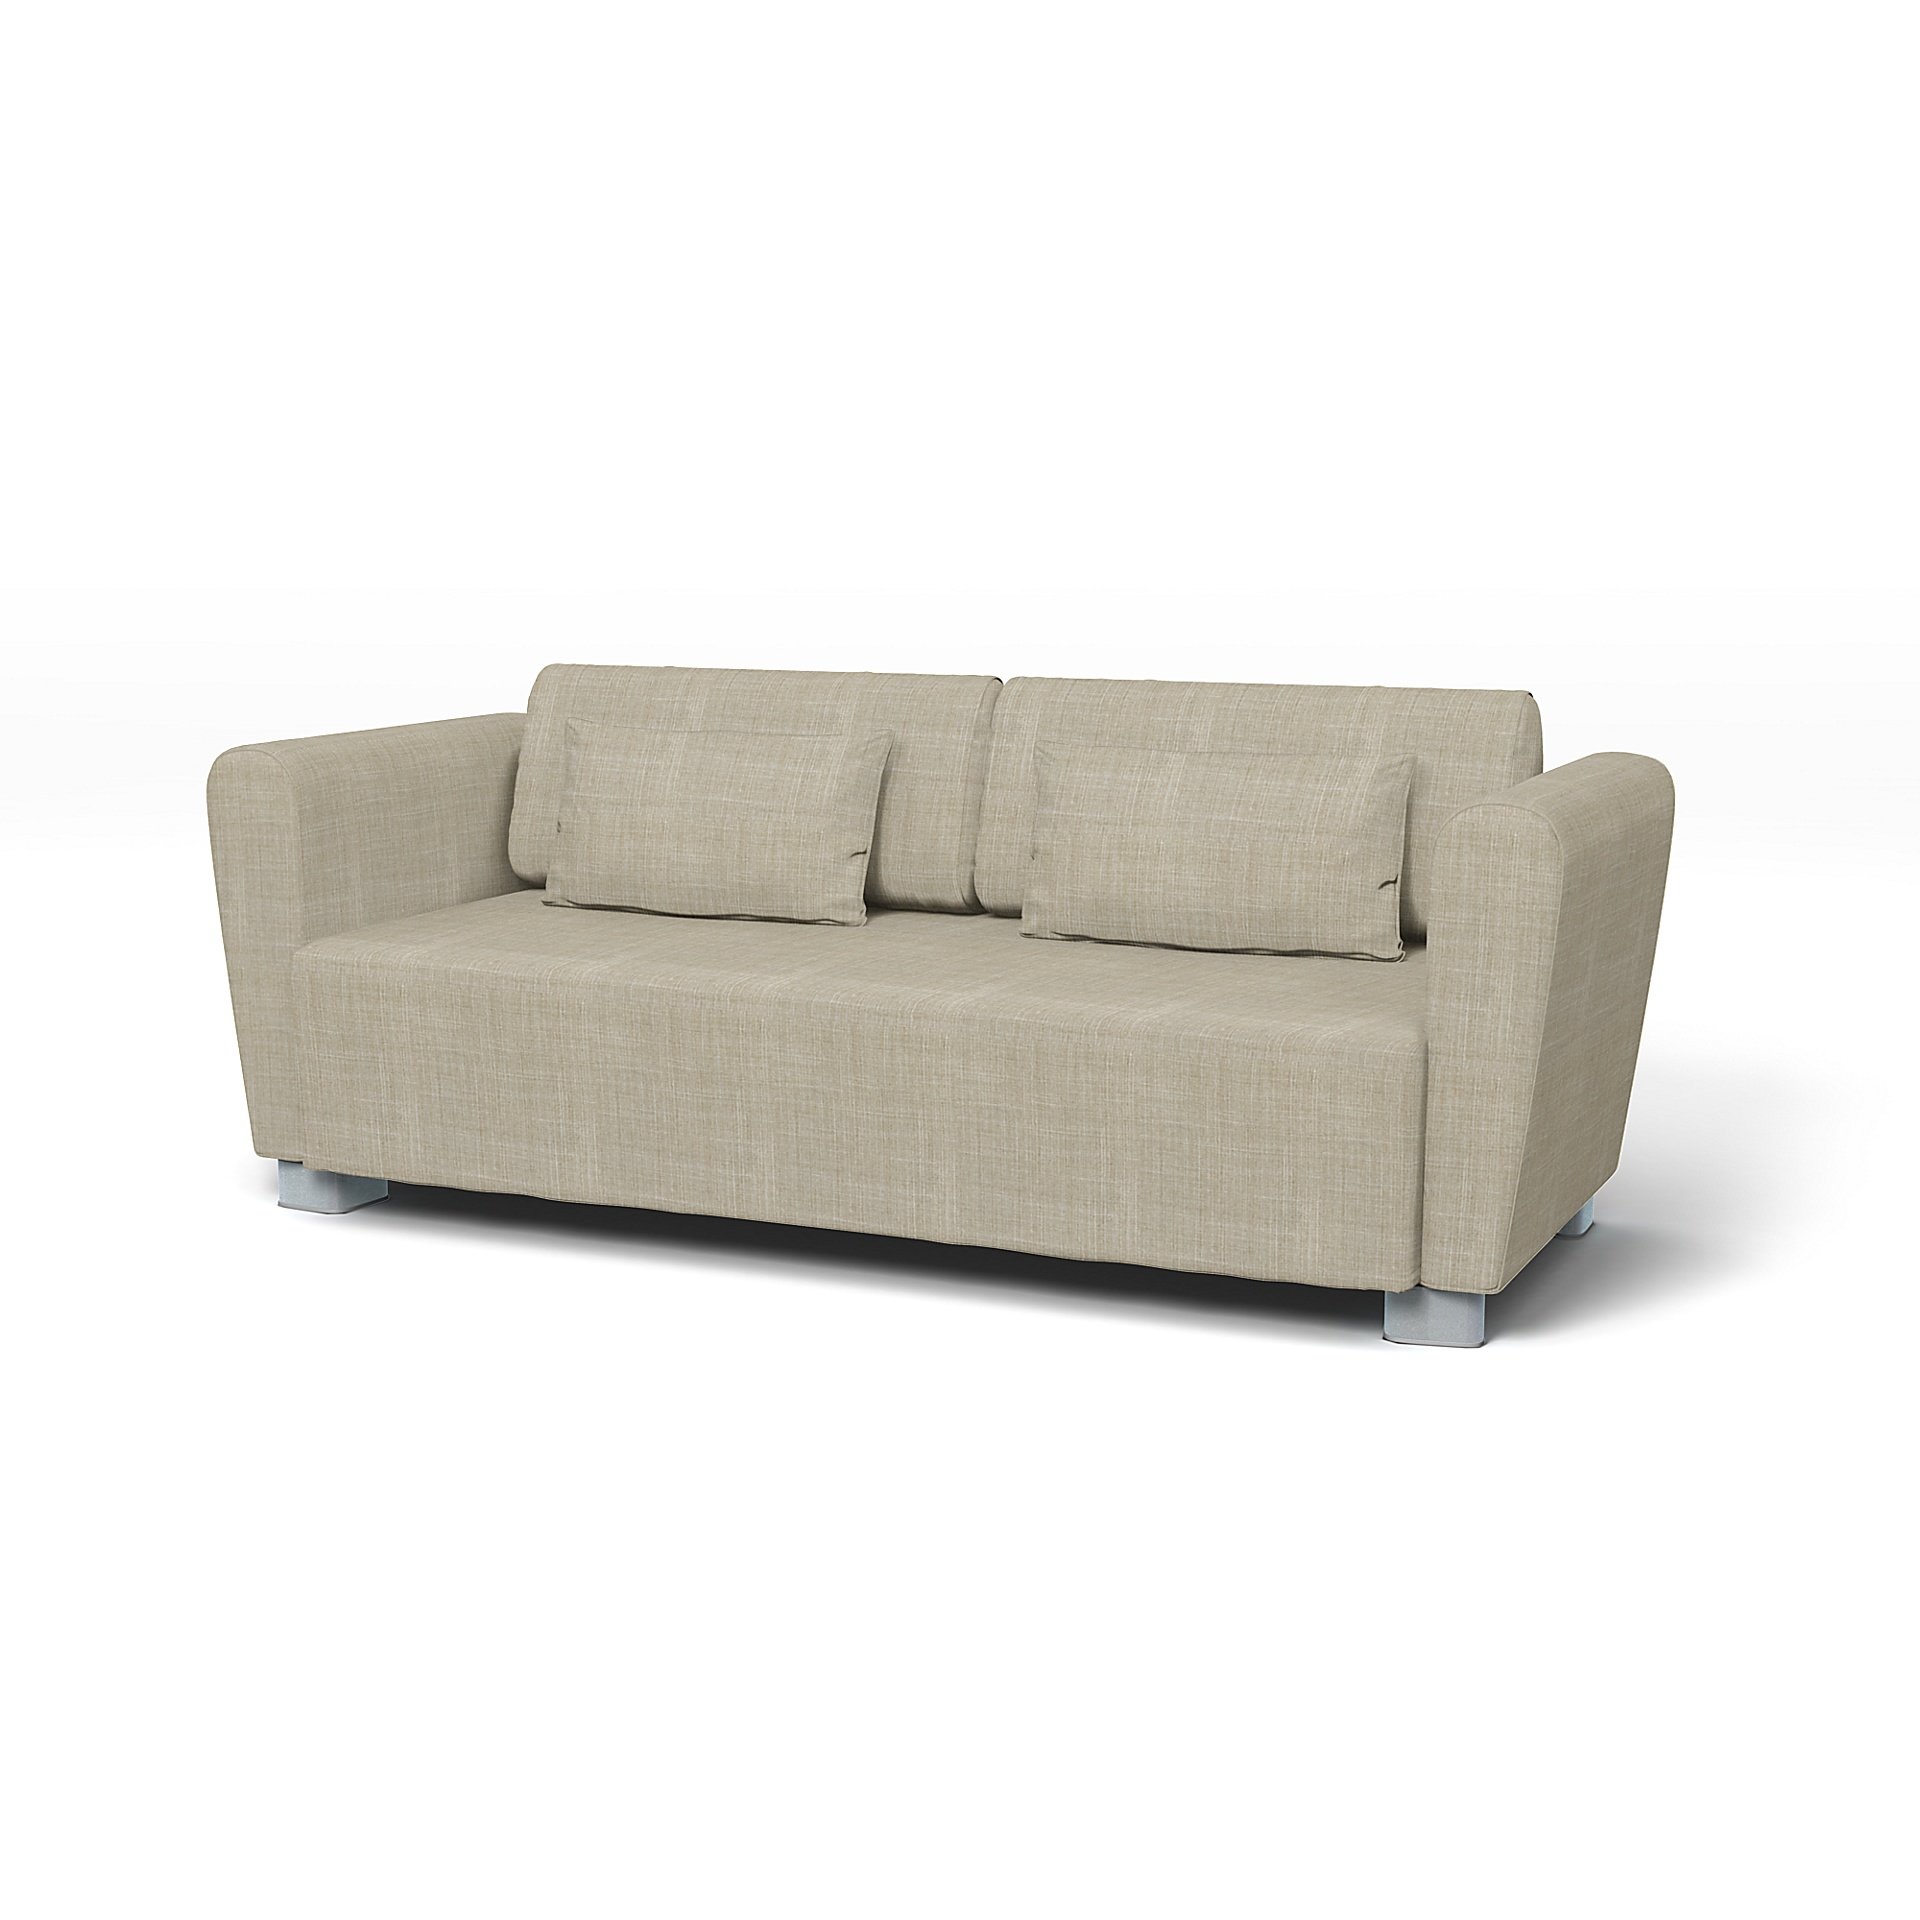 IKEA - Mysinge 2 Seater Sofa Cover, Sand Beige, Boucle & Texture - Bemz